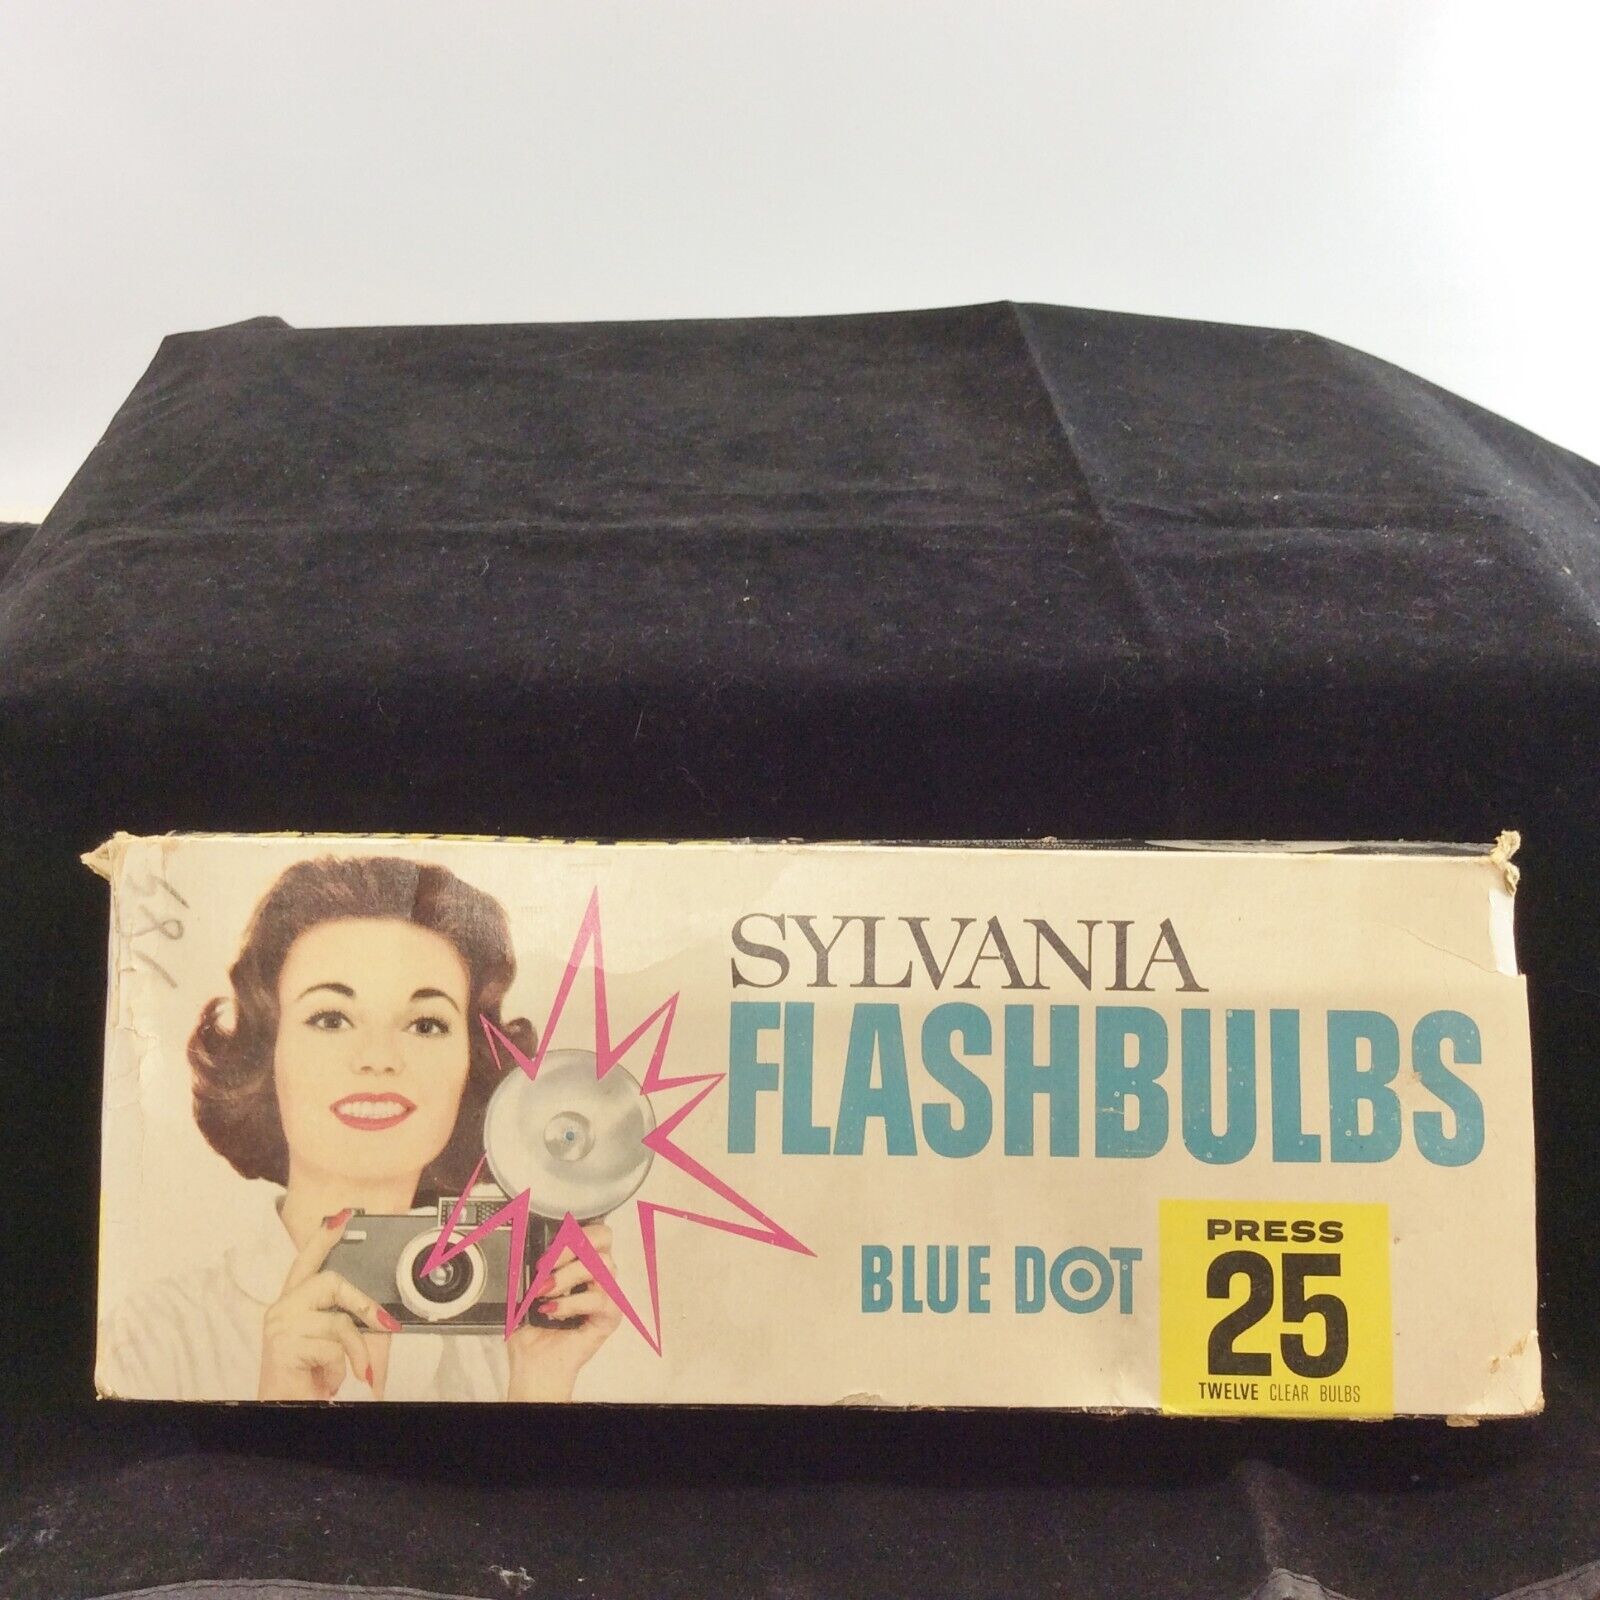 10 Vintage Sylvania Flashbulbs Blue Dot Press 25 Clear Original Box Untested SYLVANIA 25